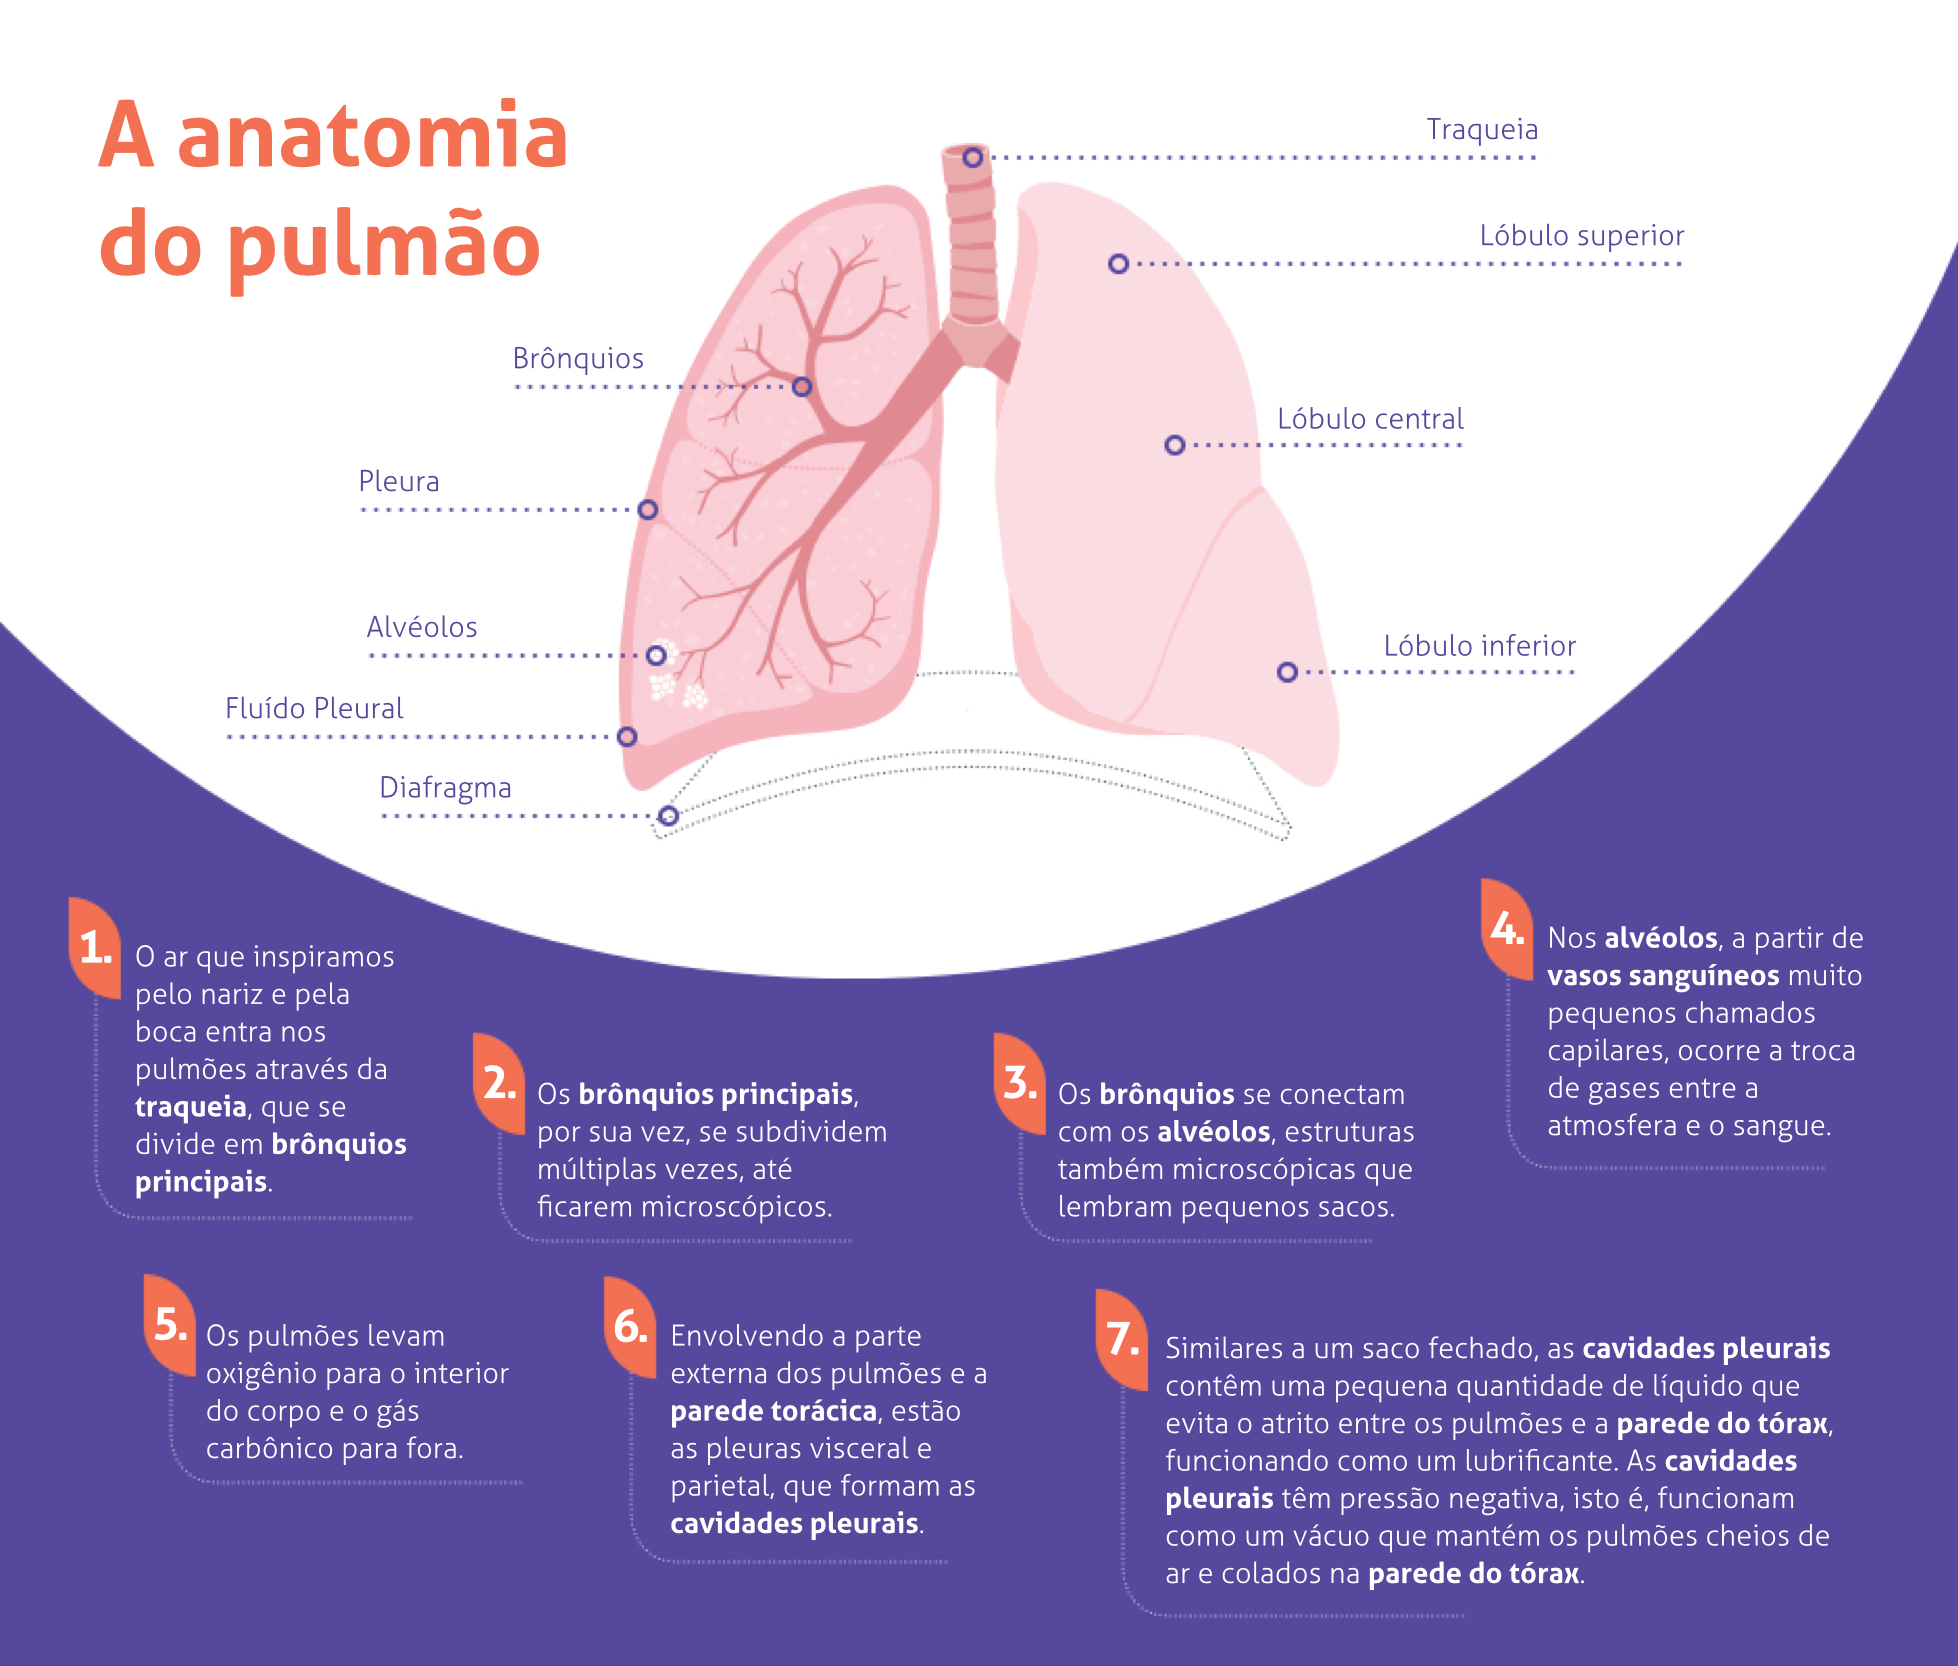 A anatomia do pulmão